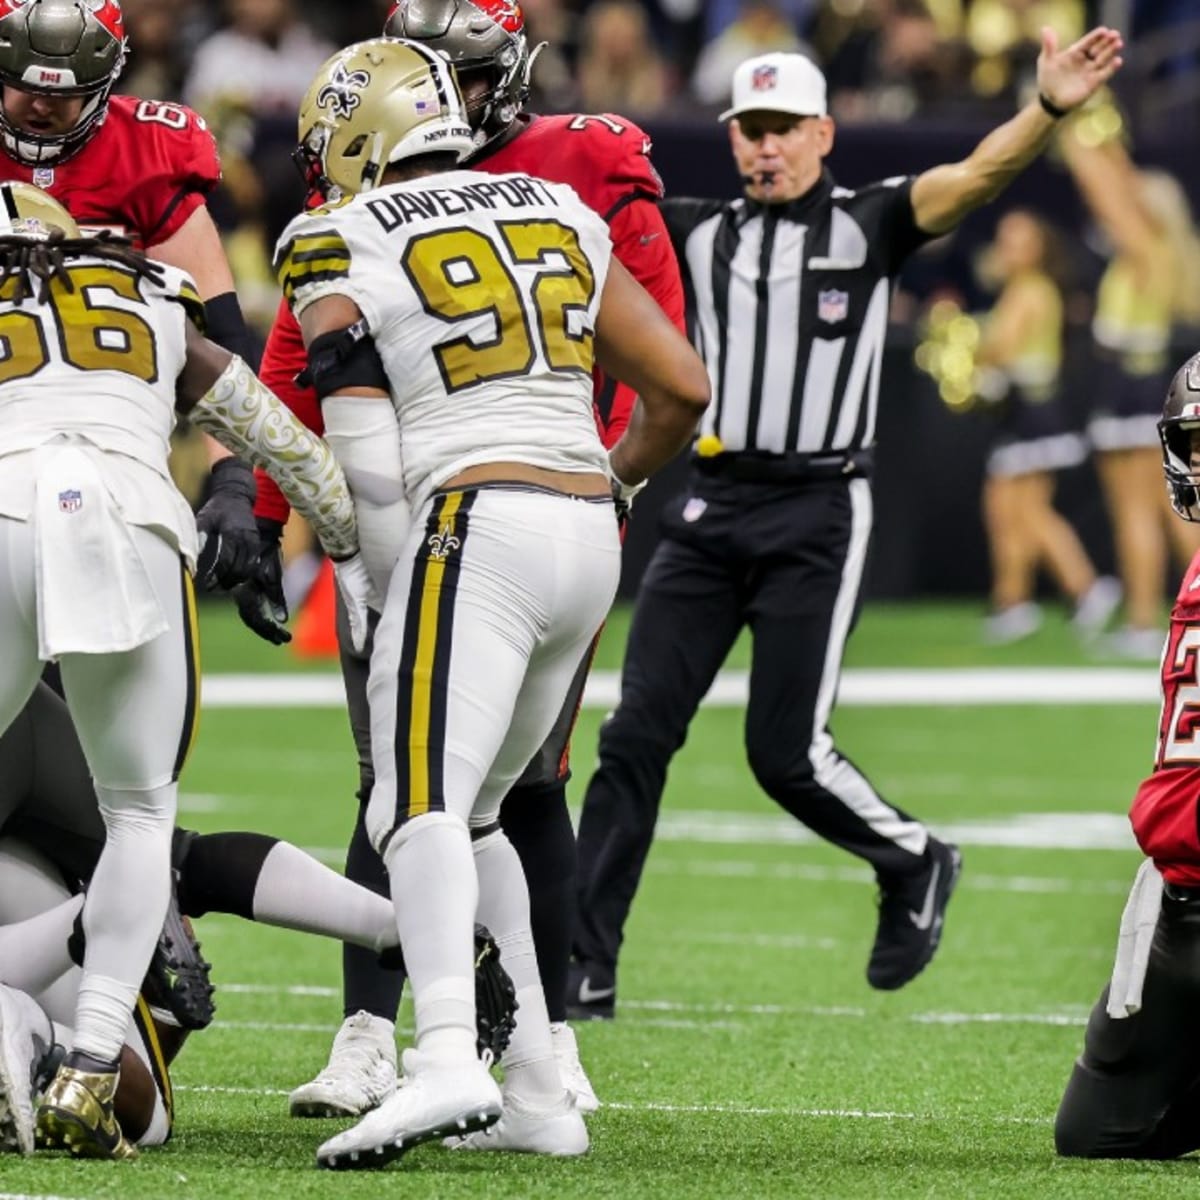 NFL roundup: Saints blank Brady's Bucs while lowly Lions topple Cardinals, NFL